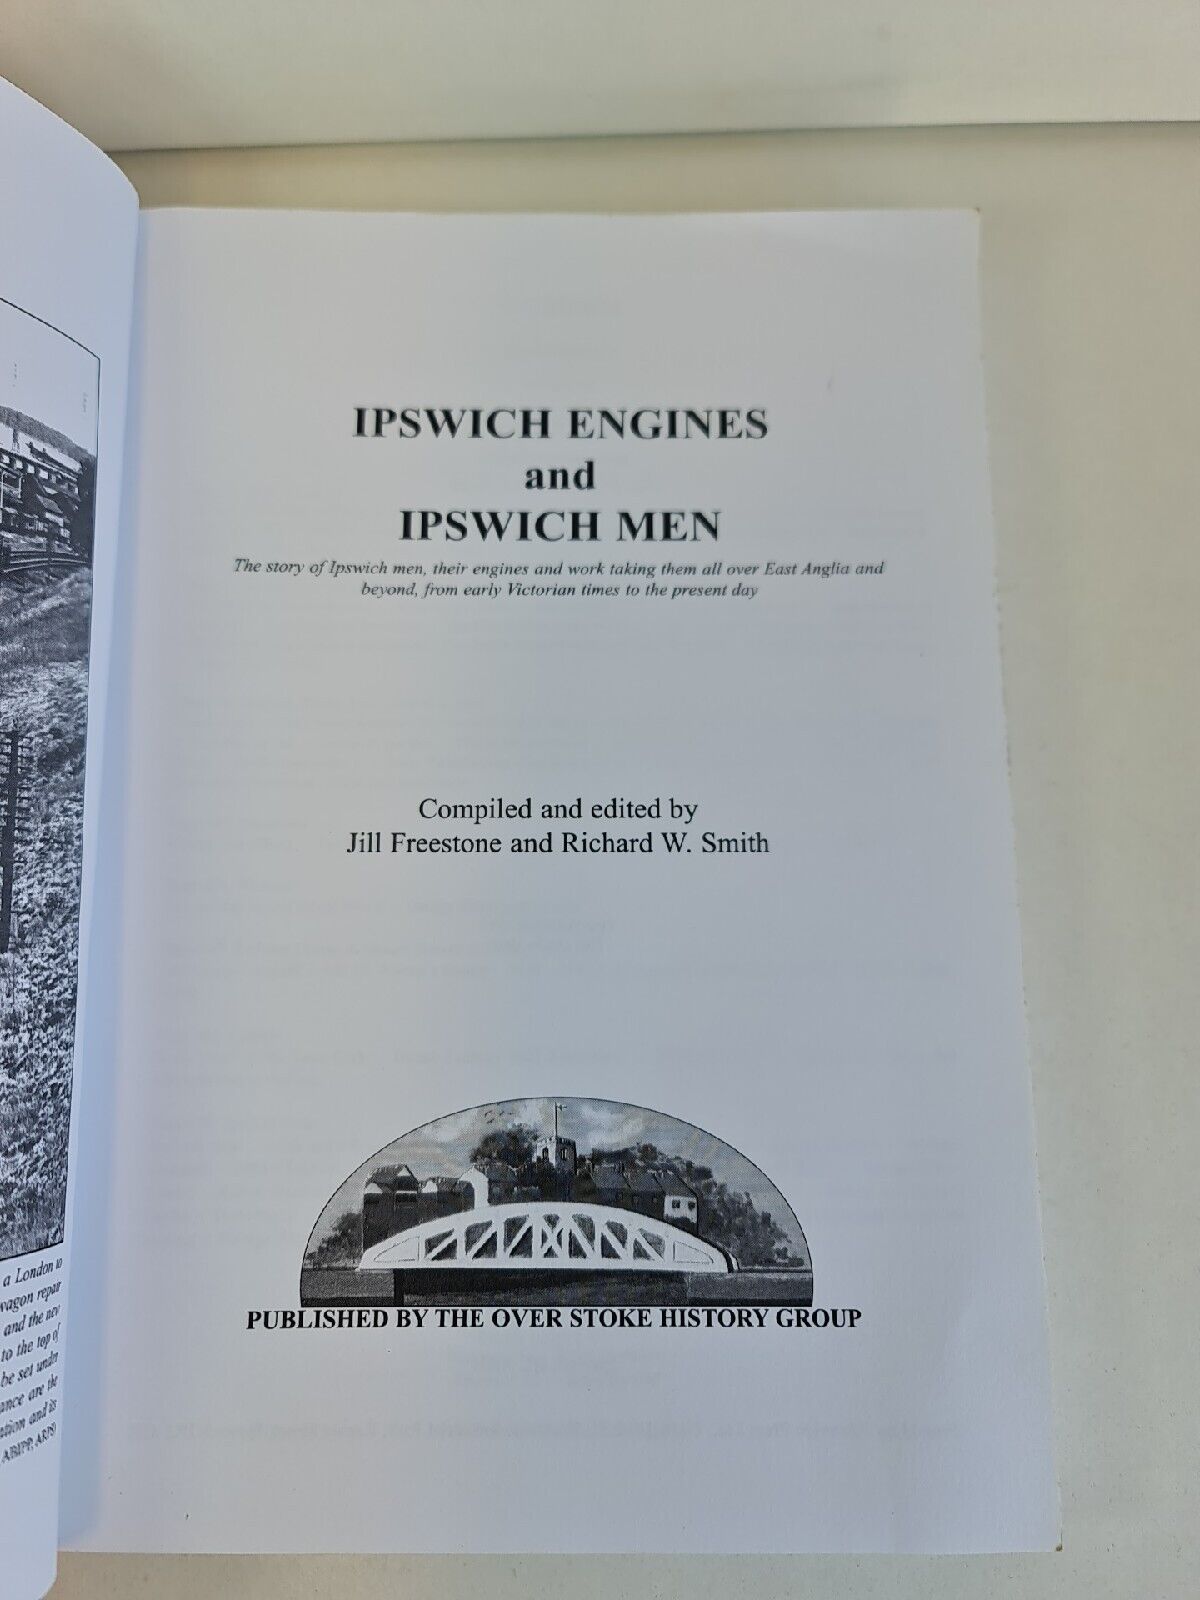 Ipswich Engines and Ipswich Men... by Freestone & Smith (1999)